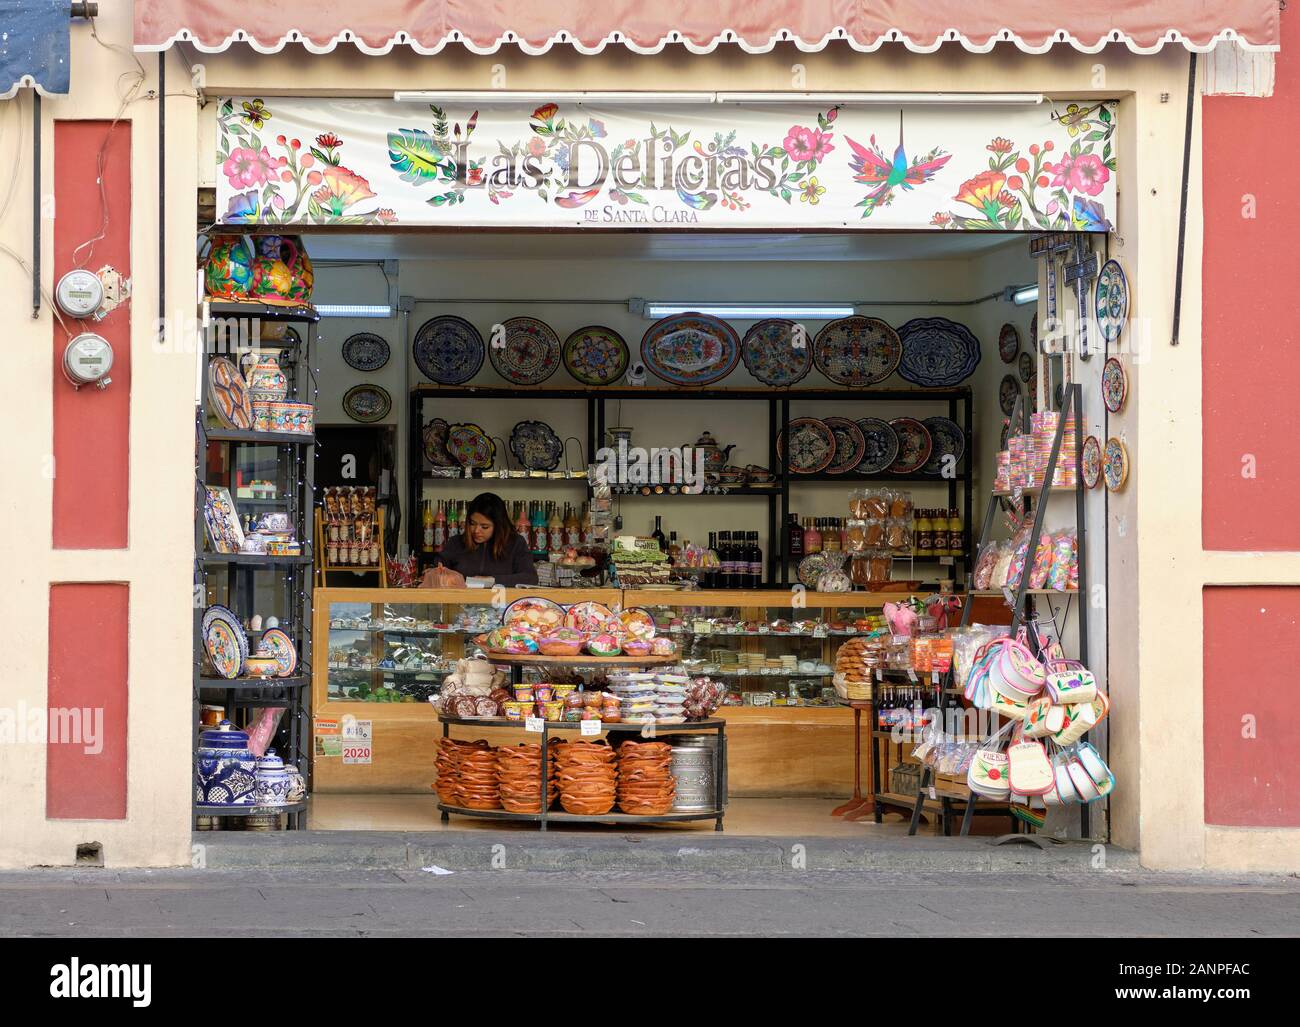 Las Delicias de Santa Clara a Shop on the Calle de los Dulces in Puebla (Street of the Sweets), open view from the street Stock Photo